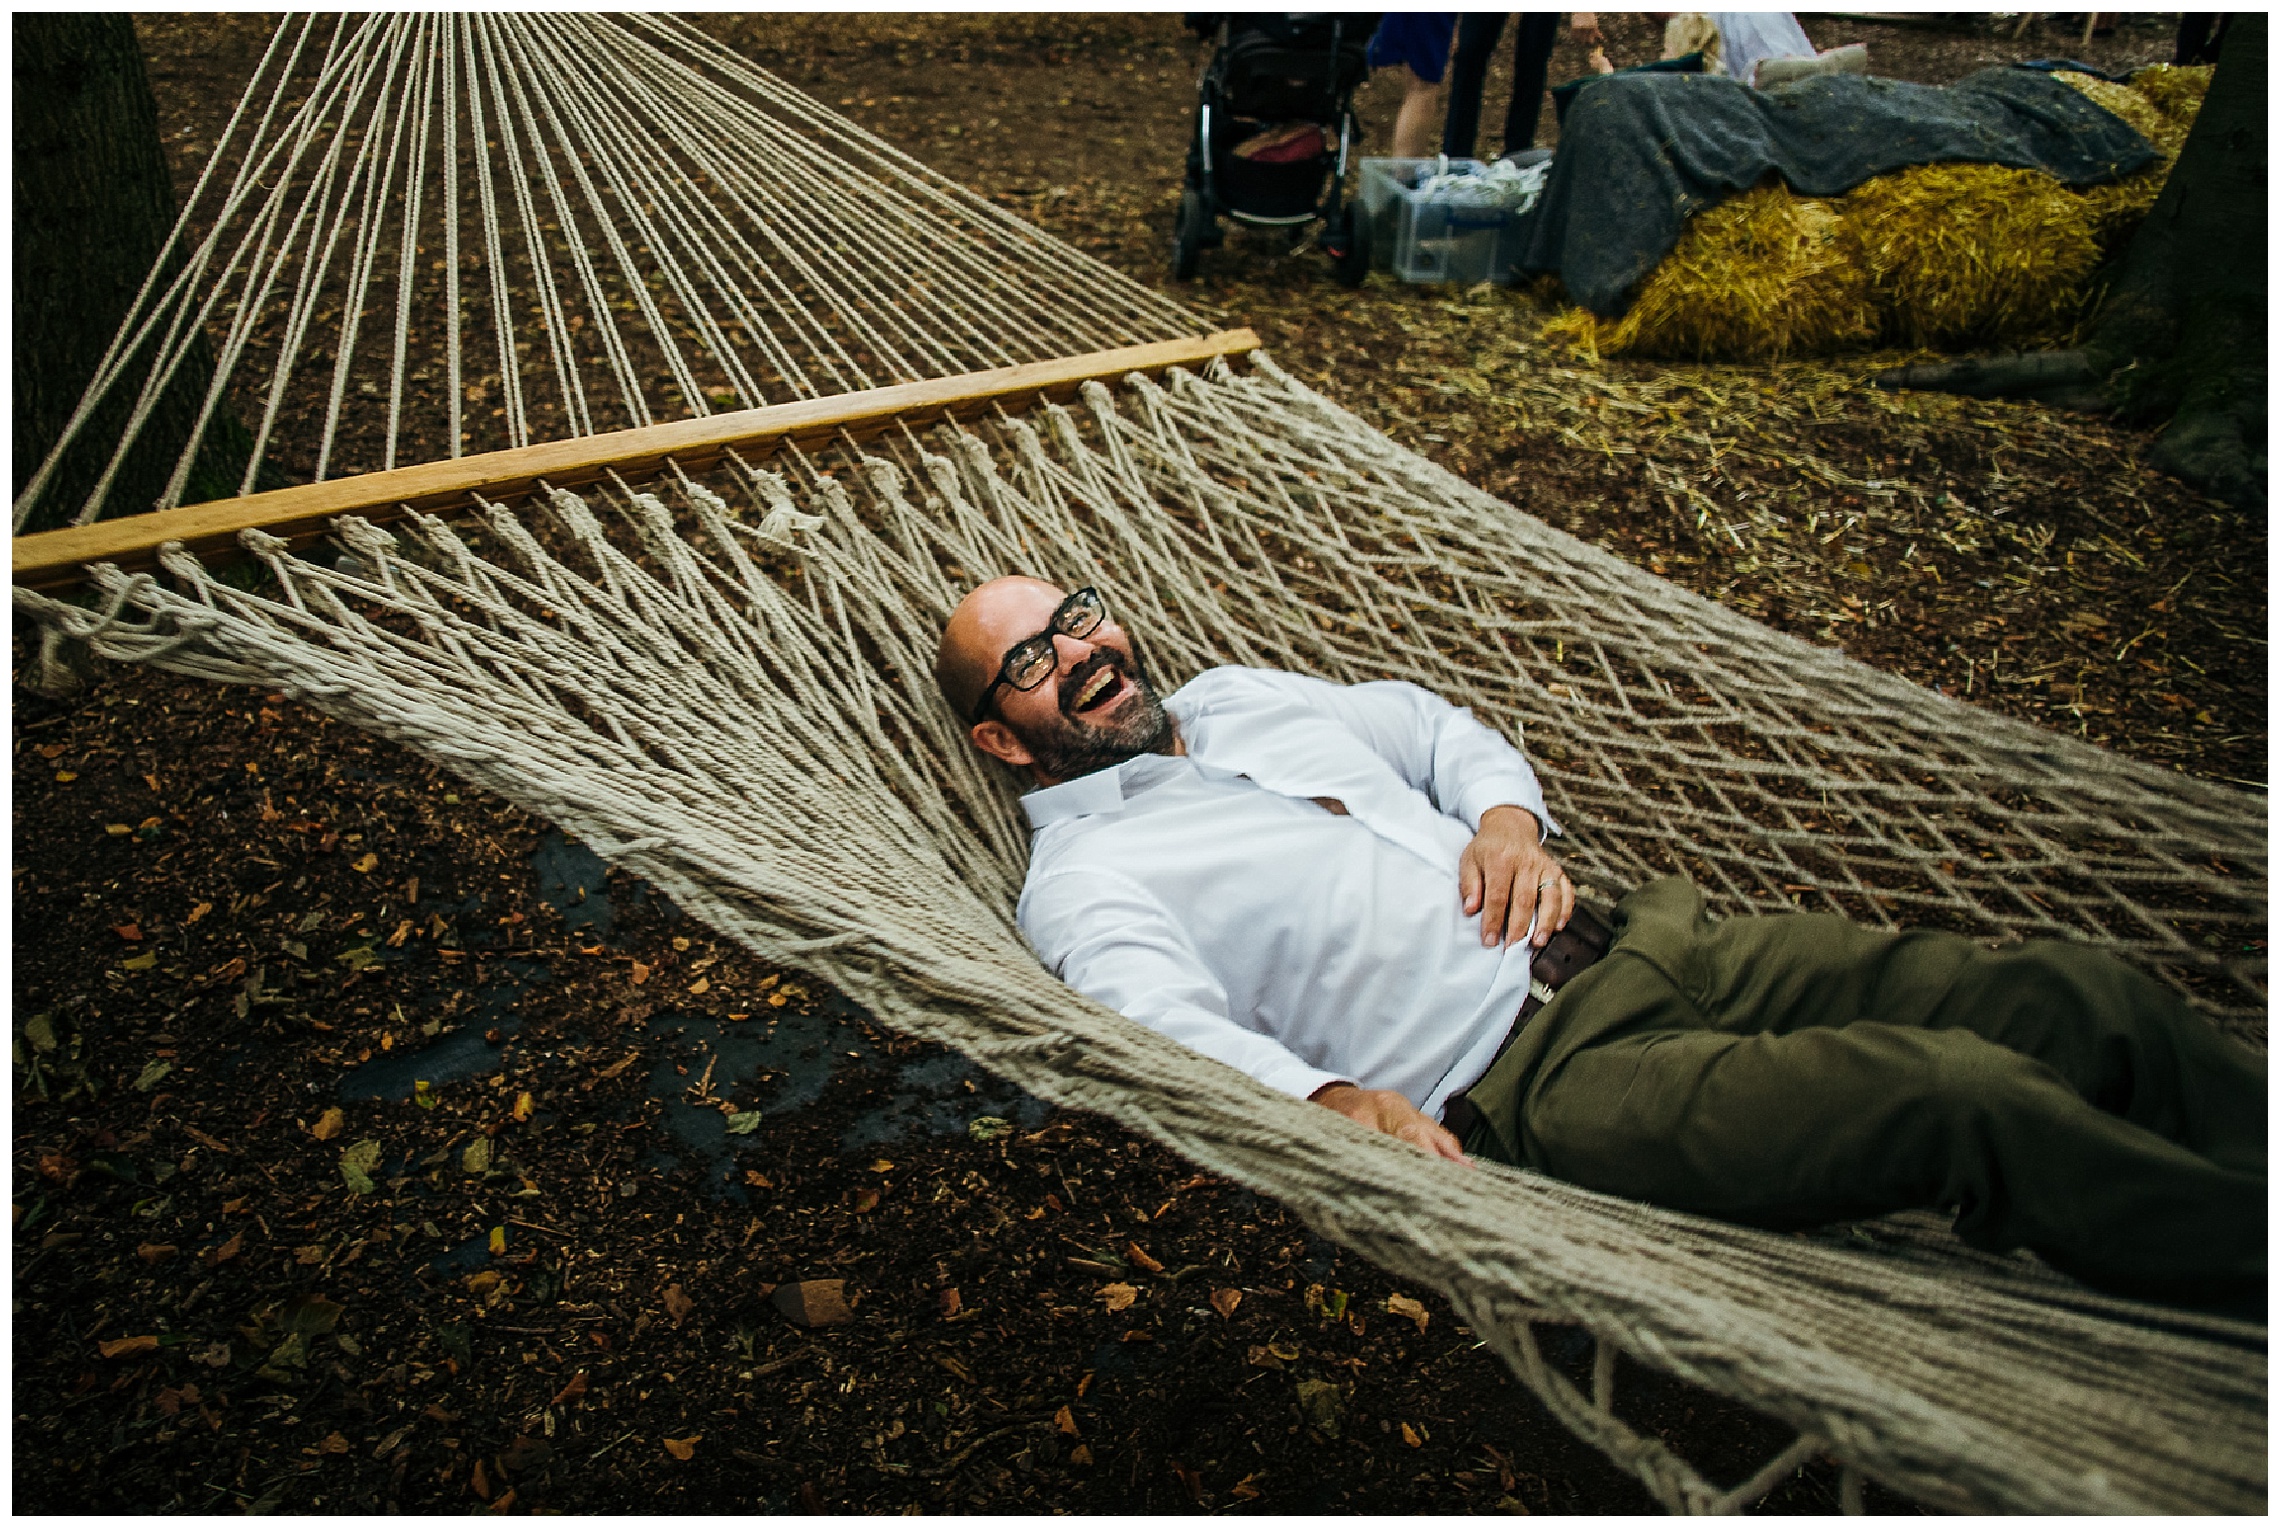 guest relaxing in hammock at woodland weddings venue